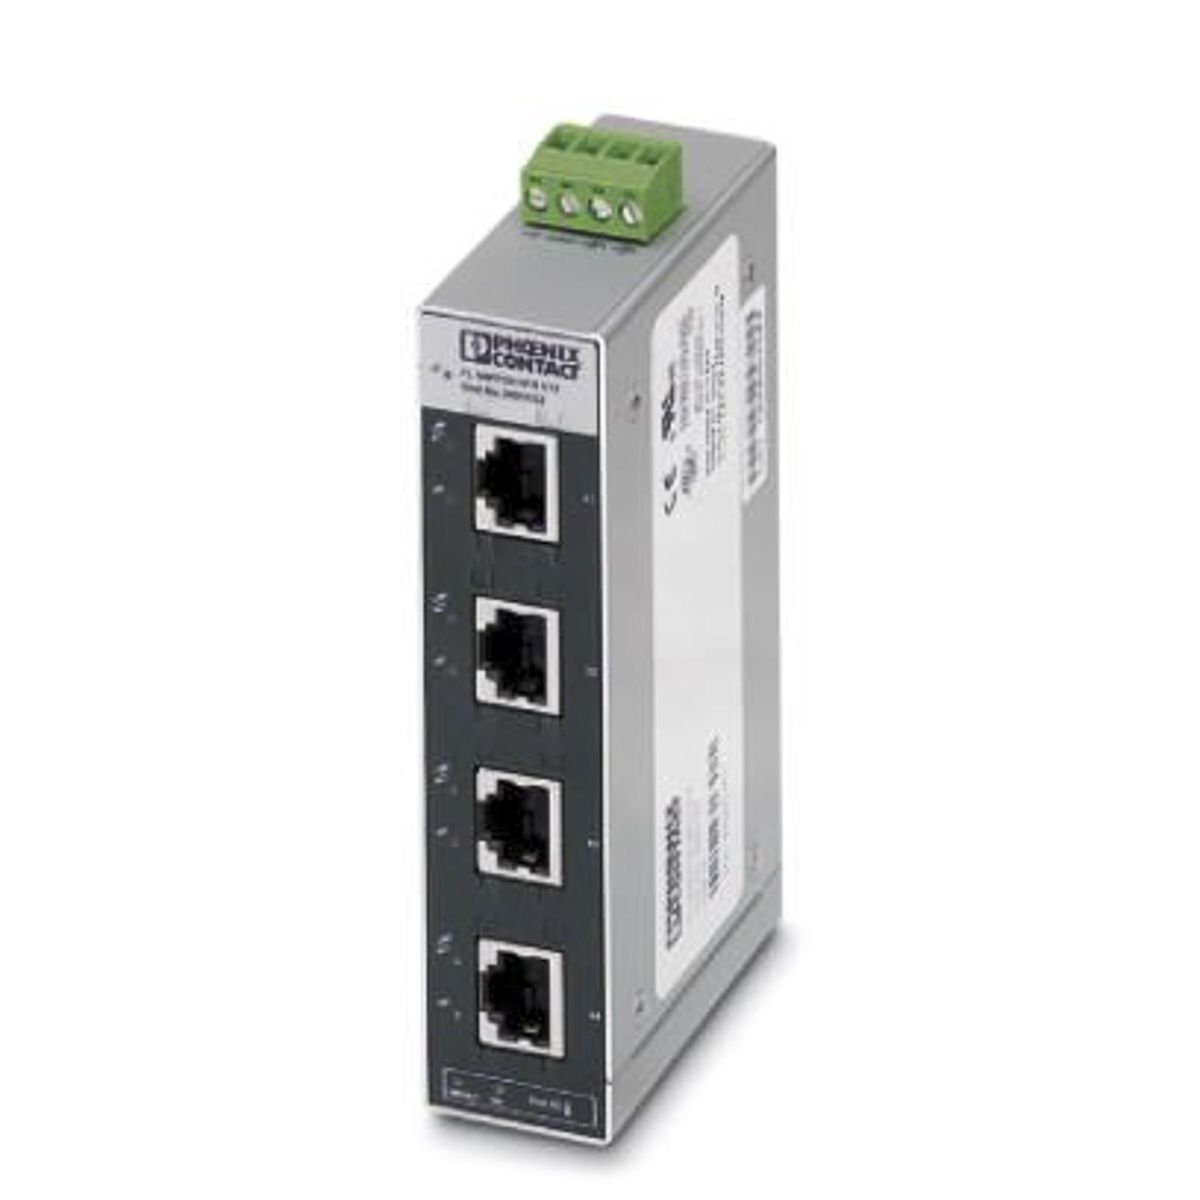 Phoenix ContactFL SWITCH SFN 4TX/FX ST Series DIN Rail Mount Ethernet Switch, 4 RJ45 Ports, 100Mbit/s Transmission, 24V